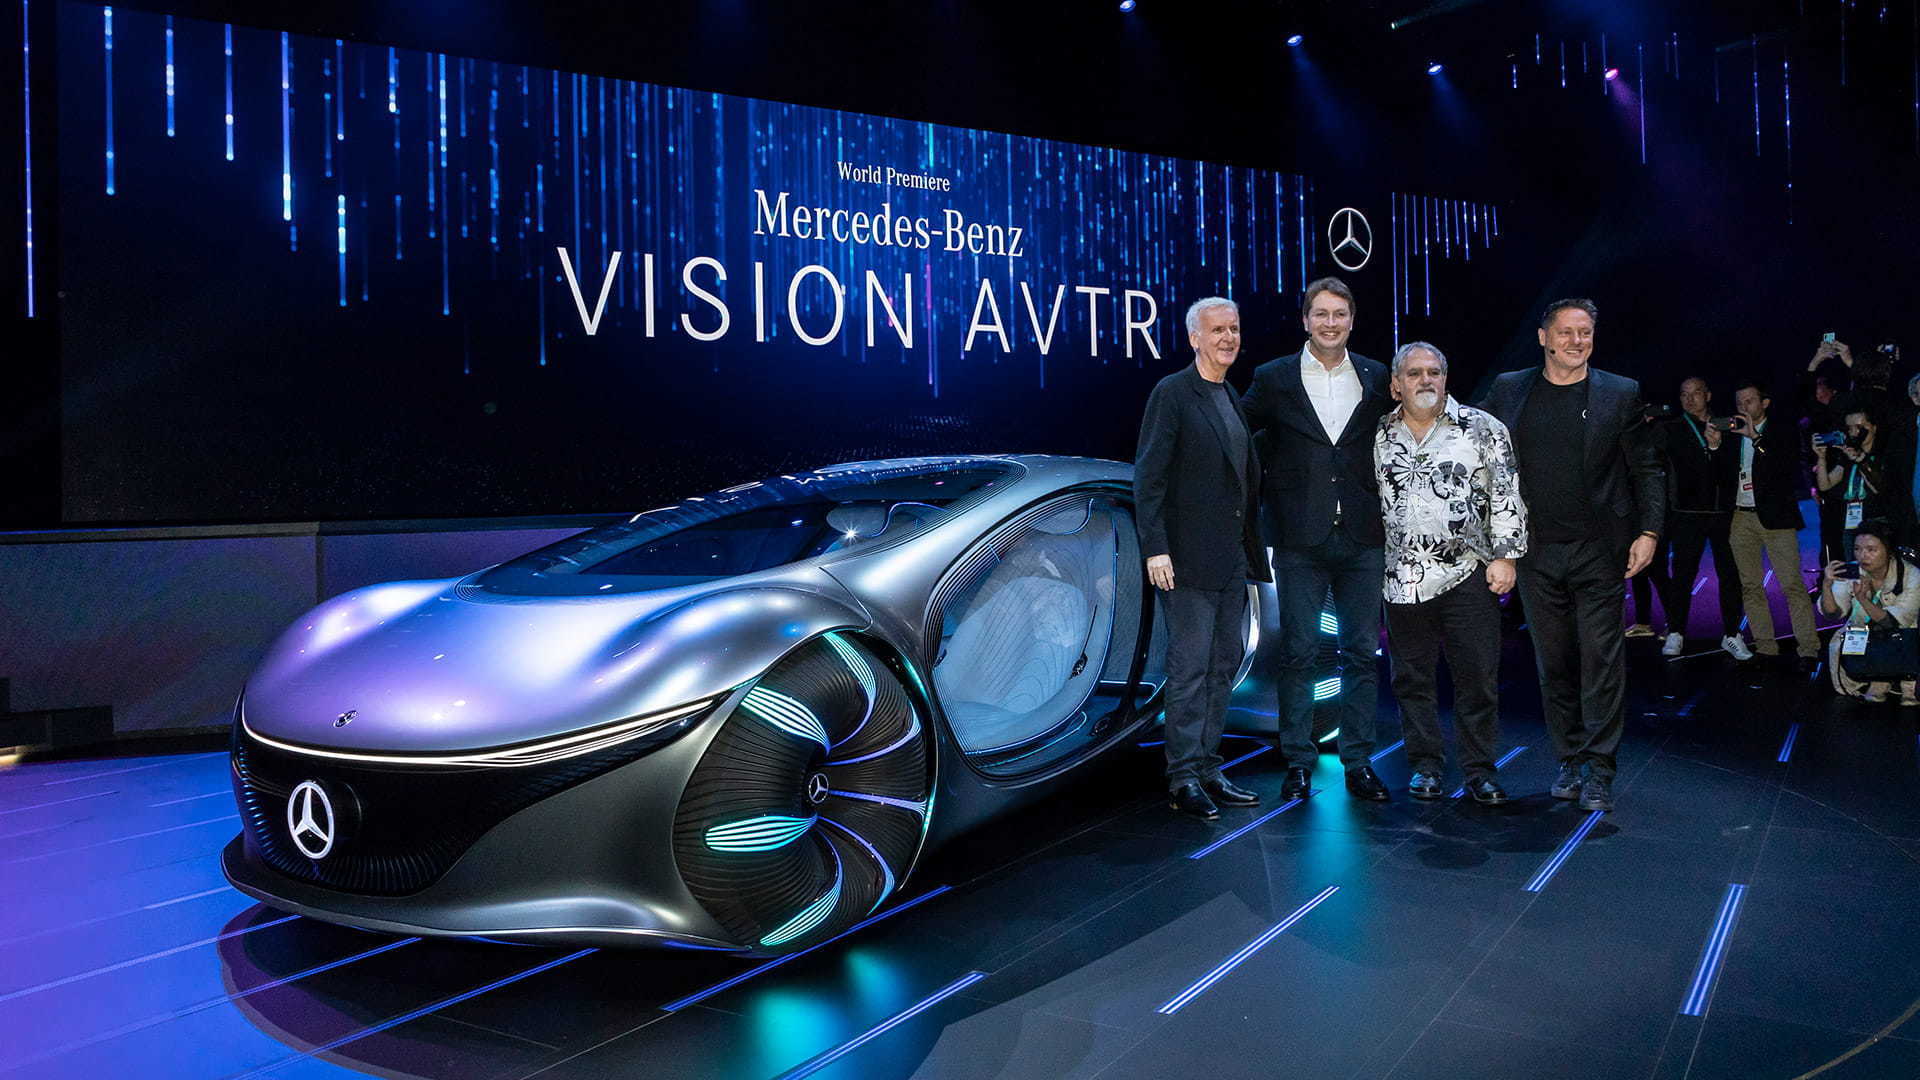 James Cameron, Ola Källenius, Jon Landau and Gorden Wagener pose with the VISION AVTR at CES 2020.